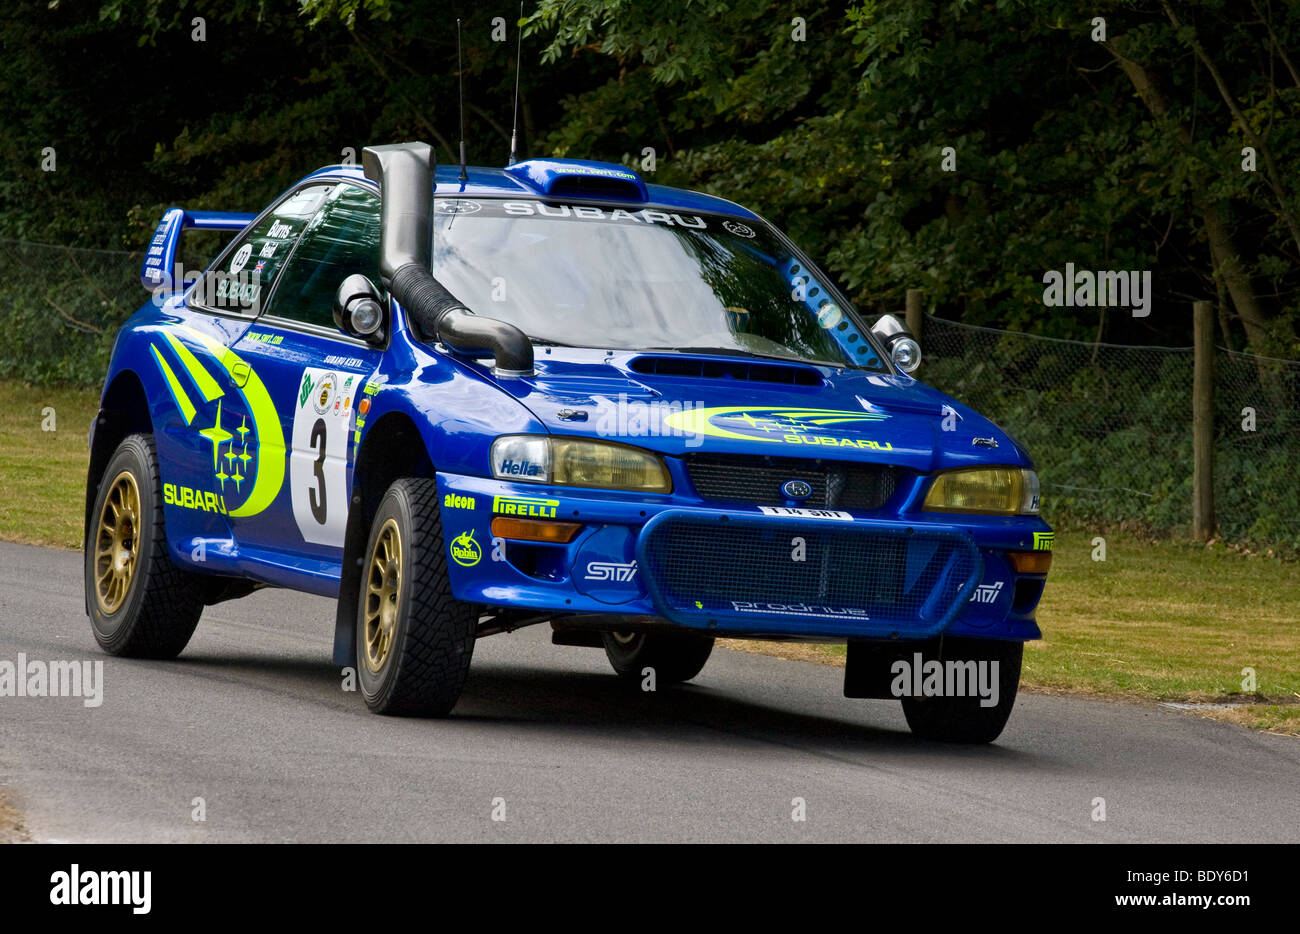 Richard Burns' Safari bereit 2000-Subaru Impreza WRC-Auto. Hillclimb beim  Goodwood Festival of Speed, Sussex, UK. Fahrer: Howarth Stockfotografie -  Alamy